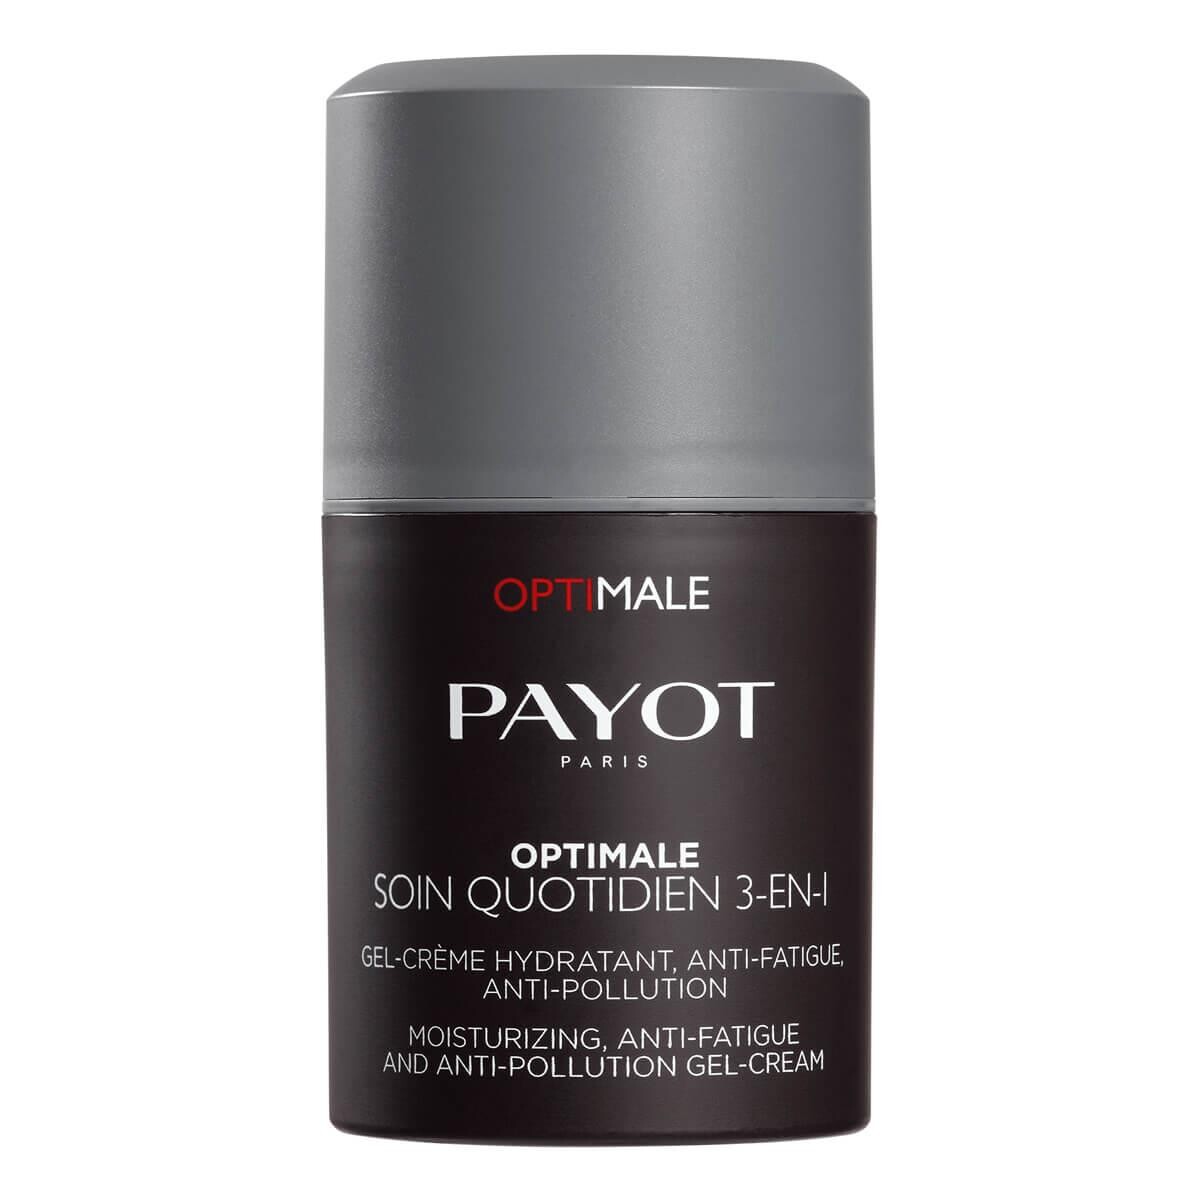 Billede af Payot Optimale 3-In-1 Moisturizing Gel Cream, 50 ml.